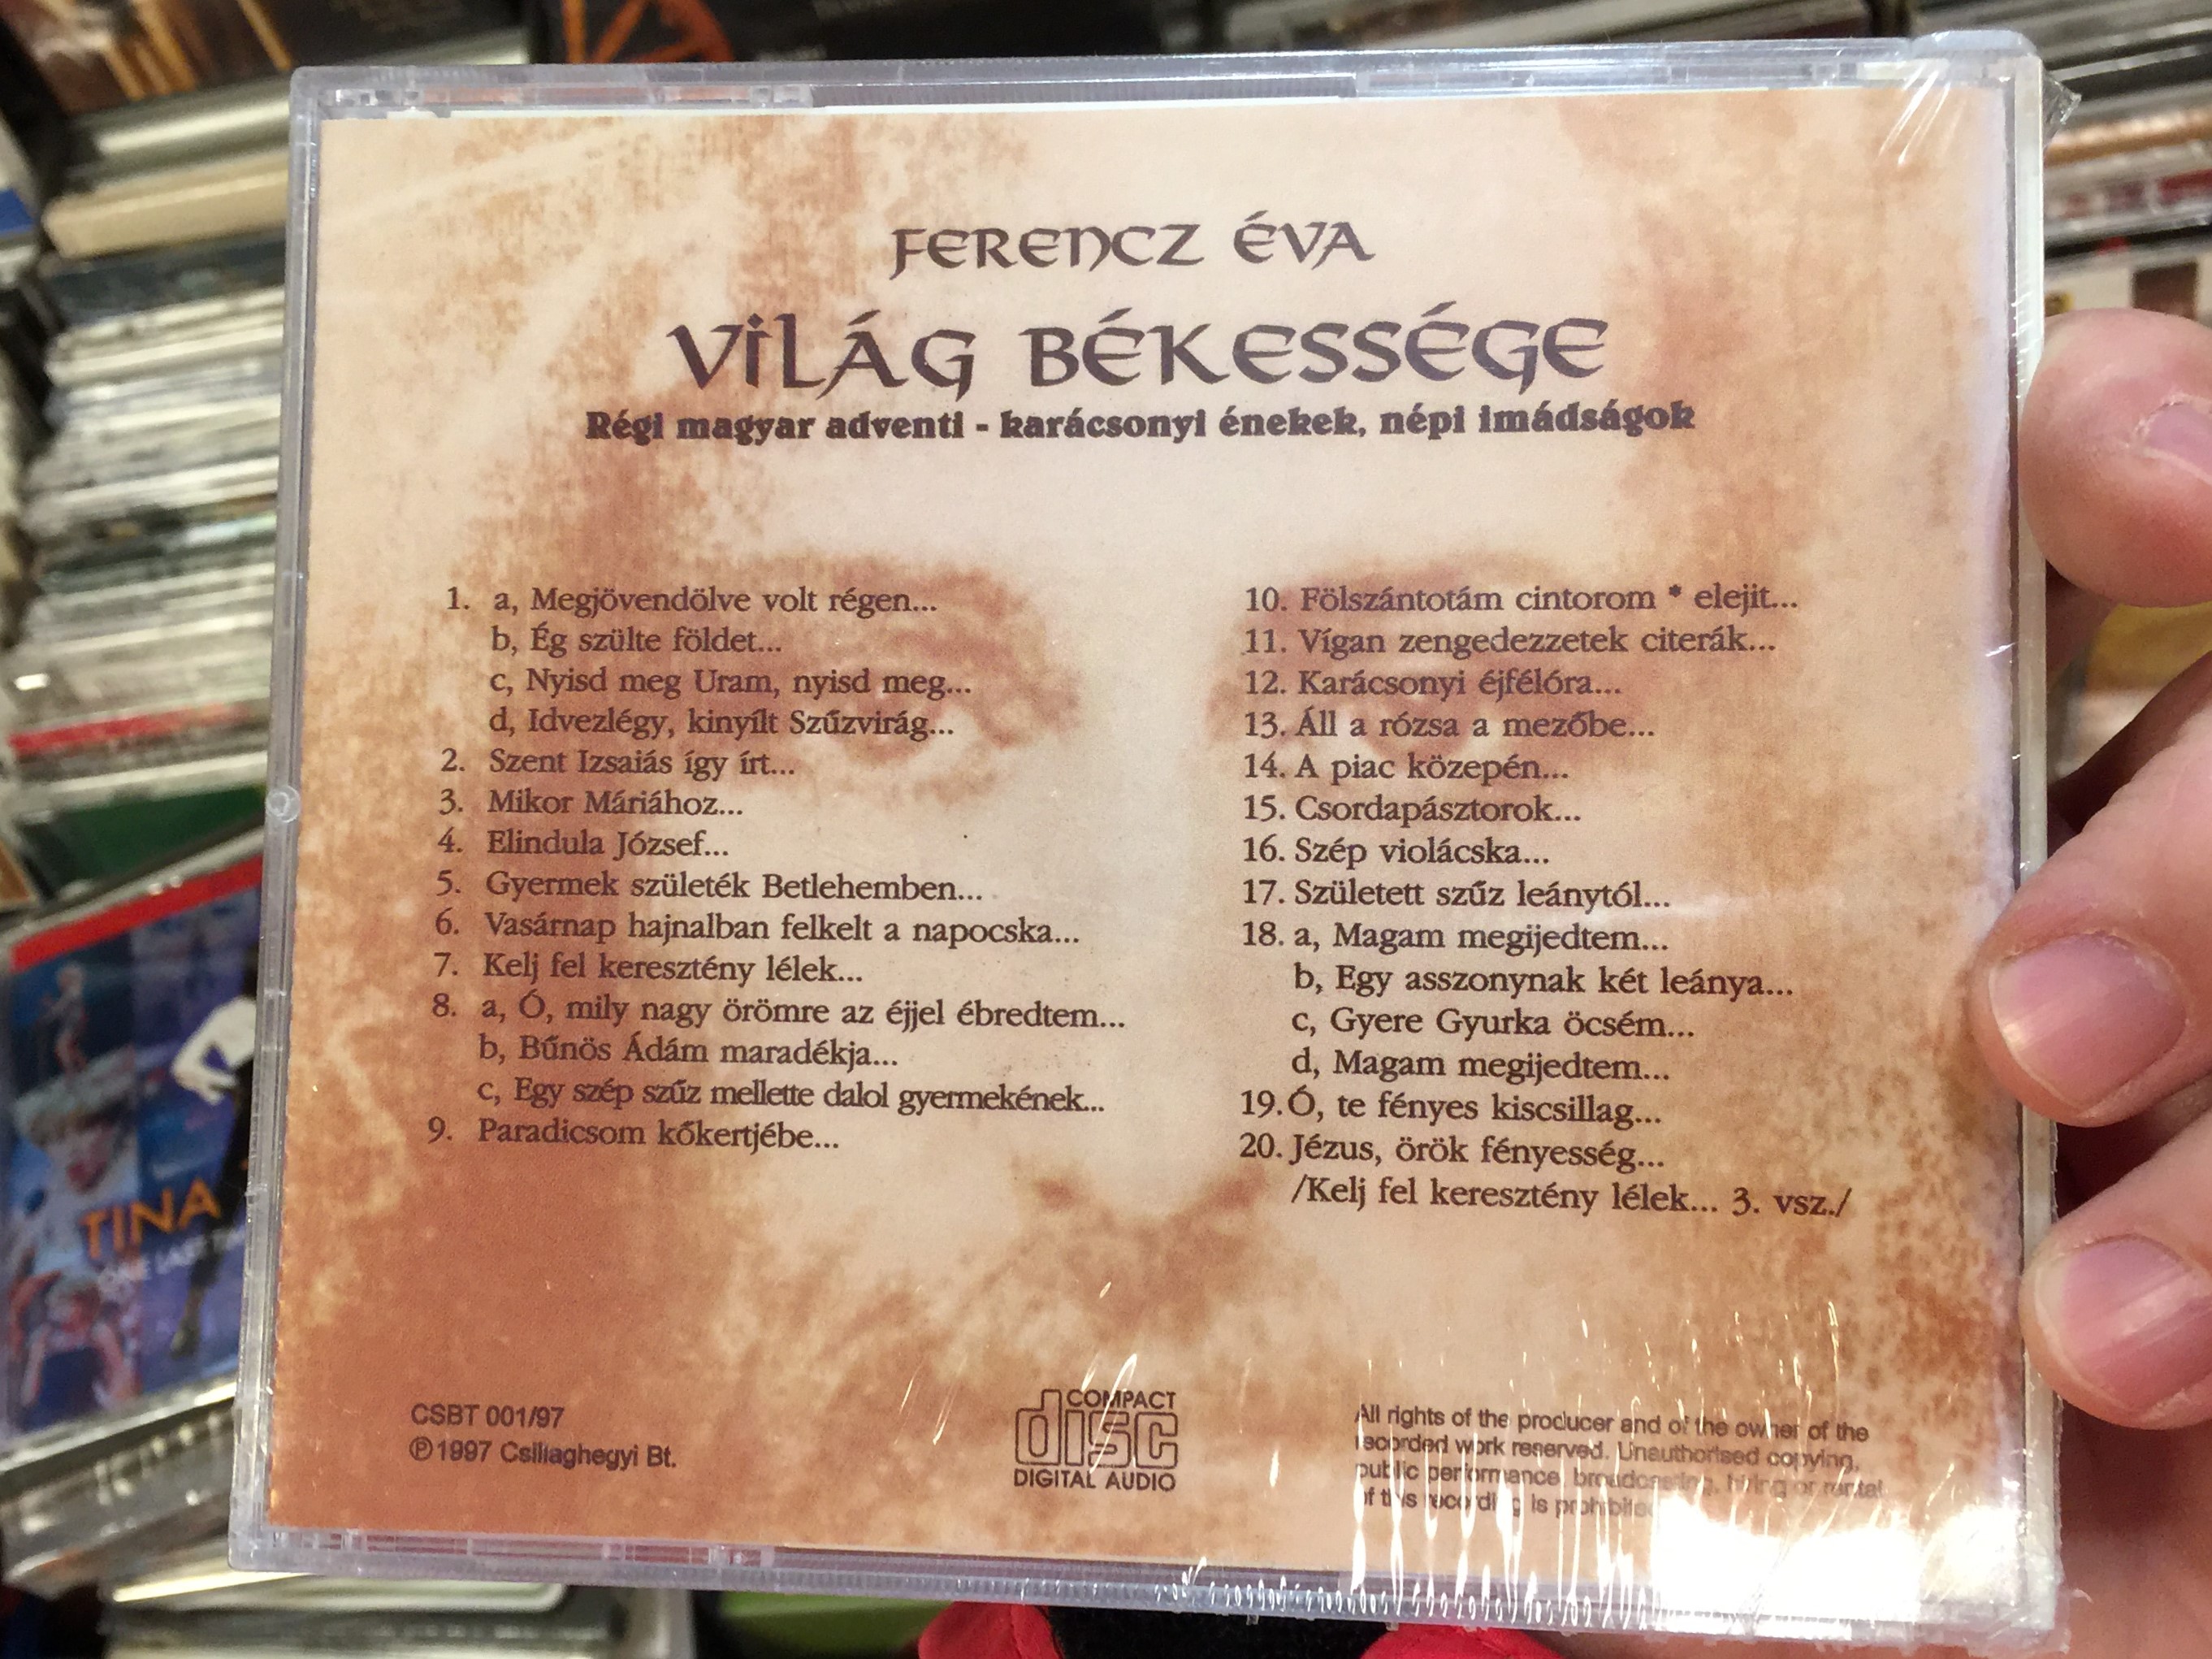 vil-g-b-kess-ge-r-gi-magyar-adventi-kar-csonyi-nekek-n-pi-im-ds-gok-ferencz-va-csillaghegyi-bt.-audio-cd-1997-csbt-00197-2-.jpg